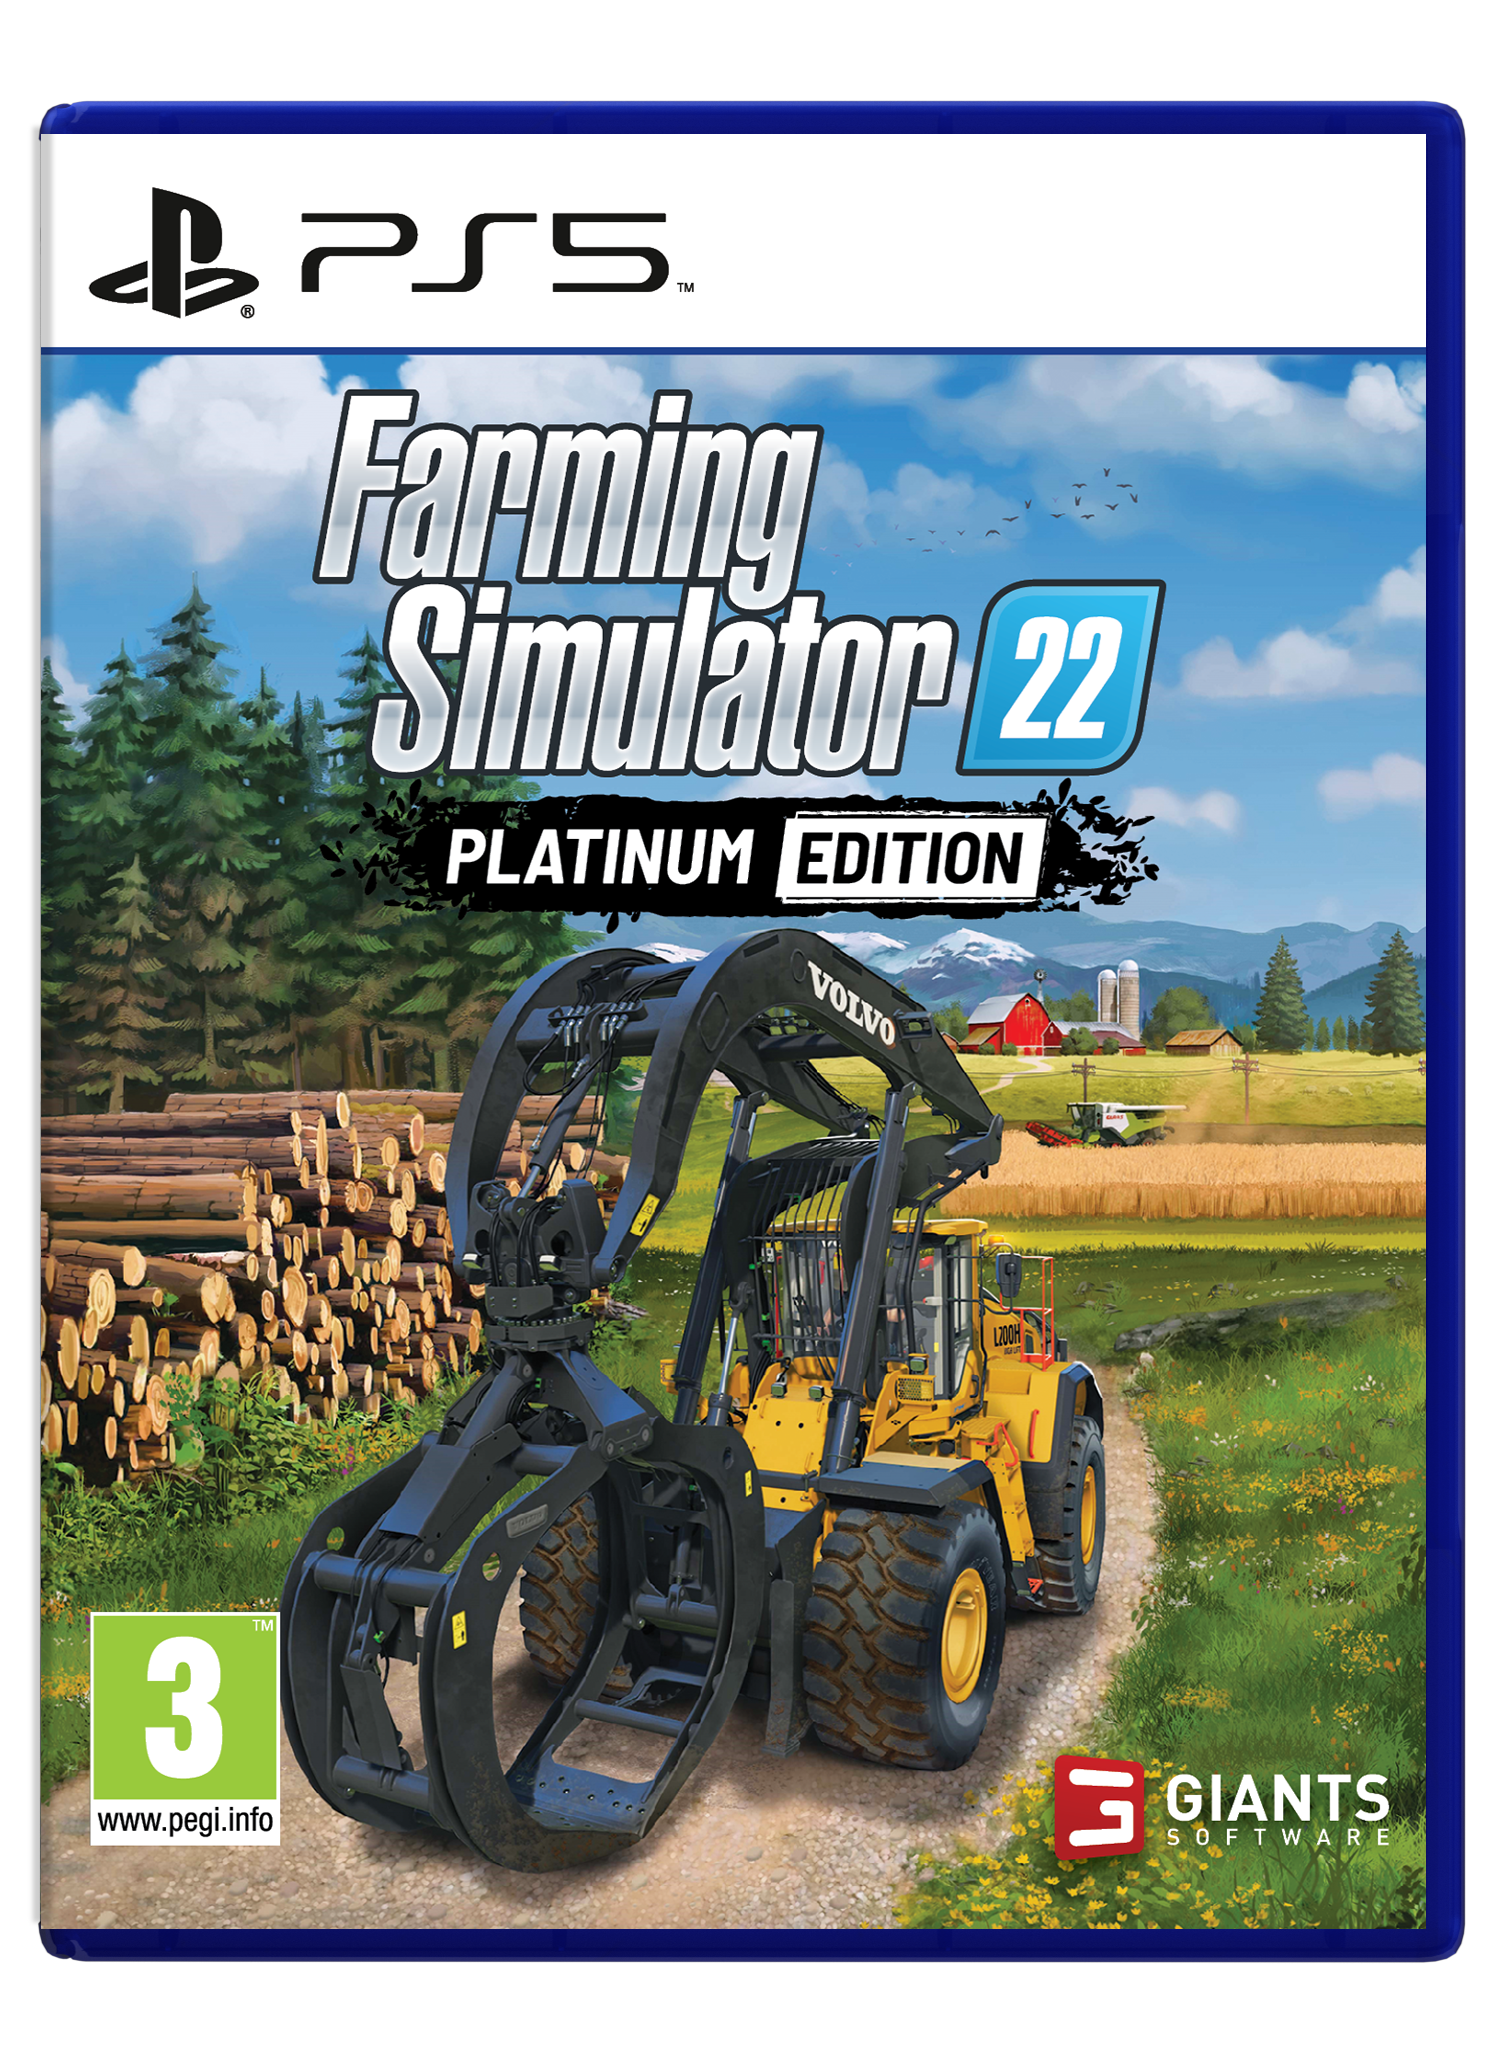 Kaufe Farming Simulator 22 (Platinum Edition) - PlayStation 5